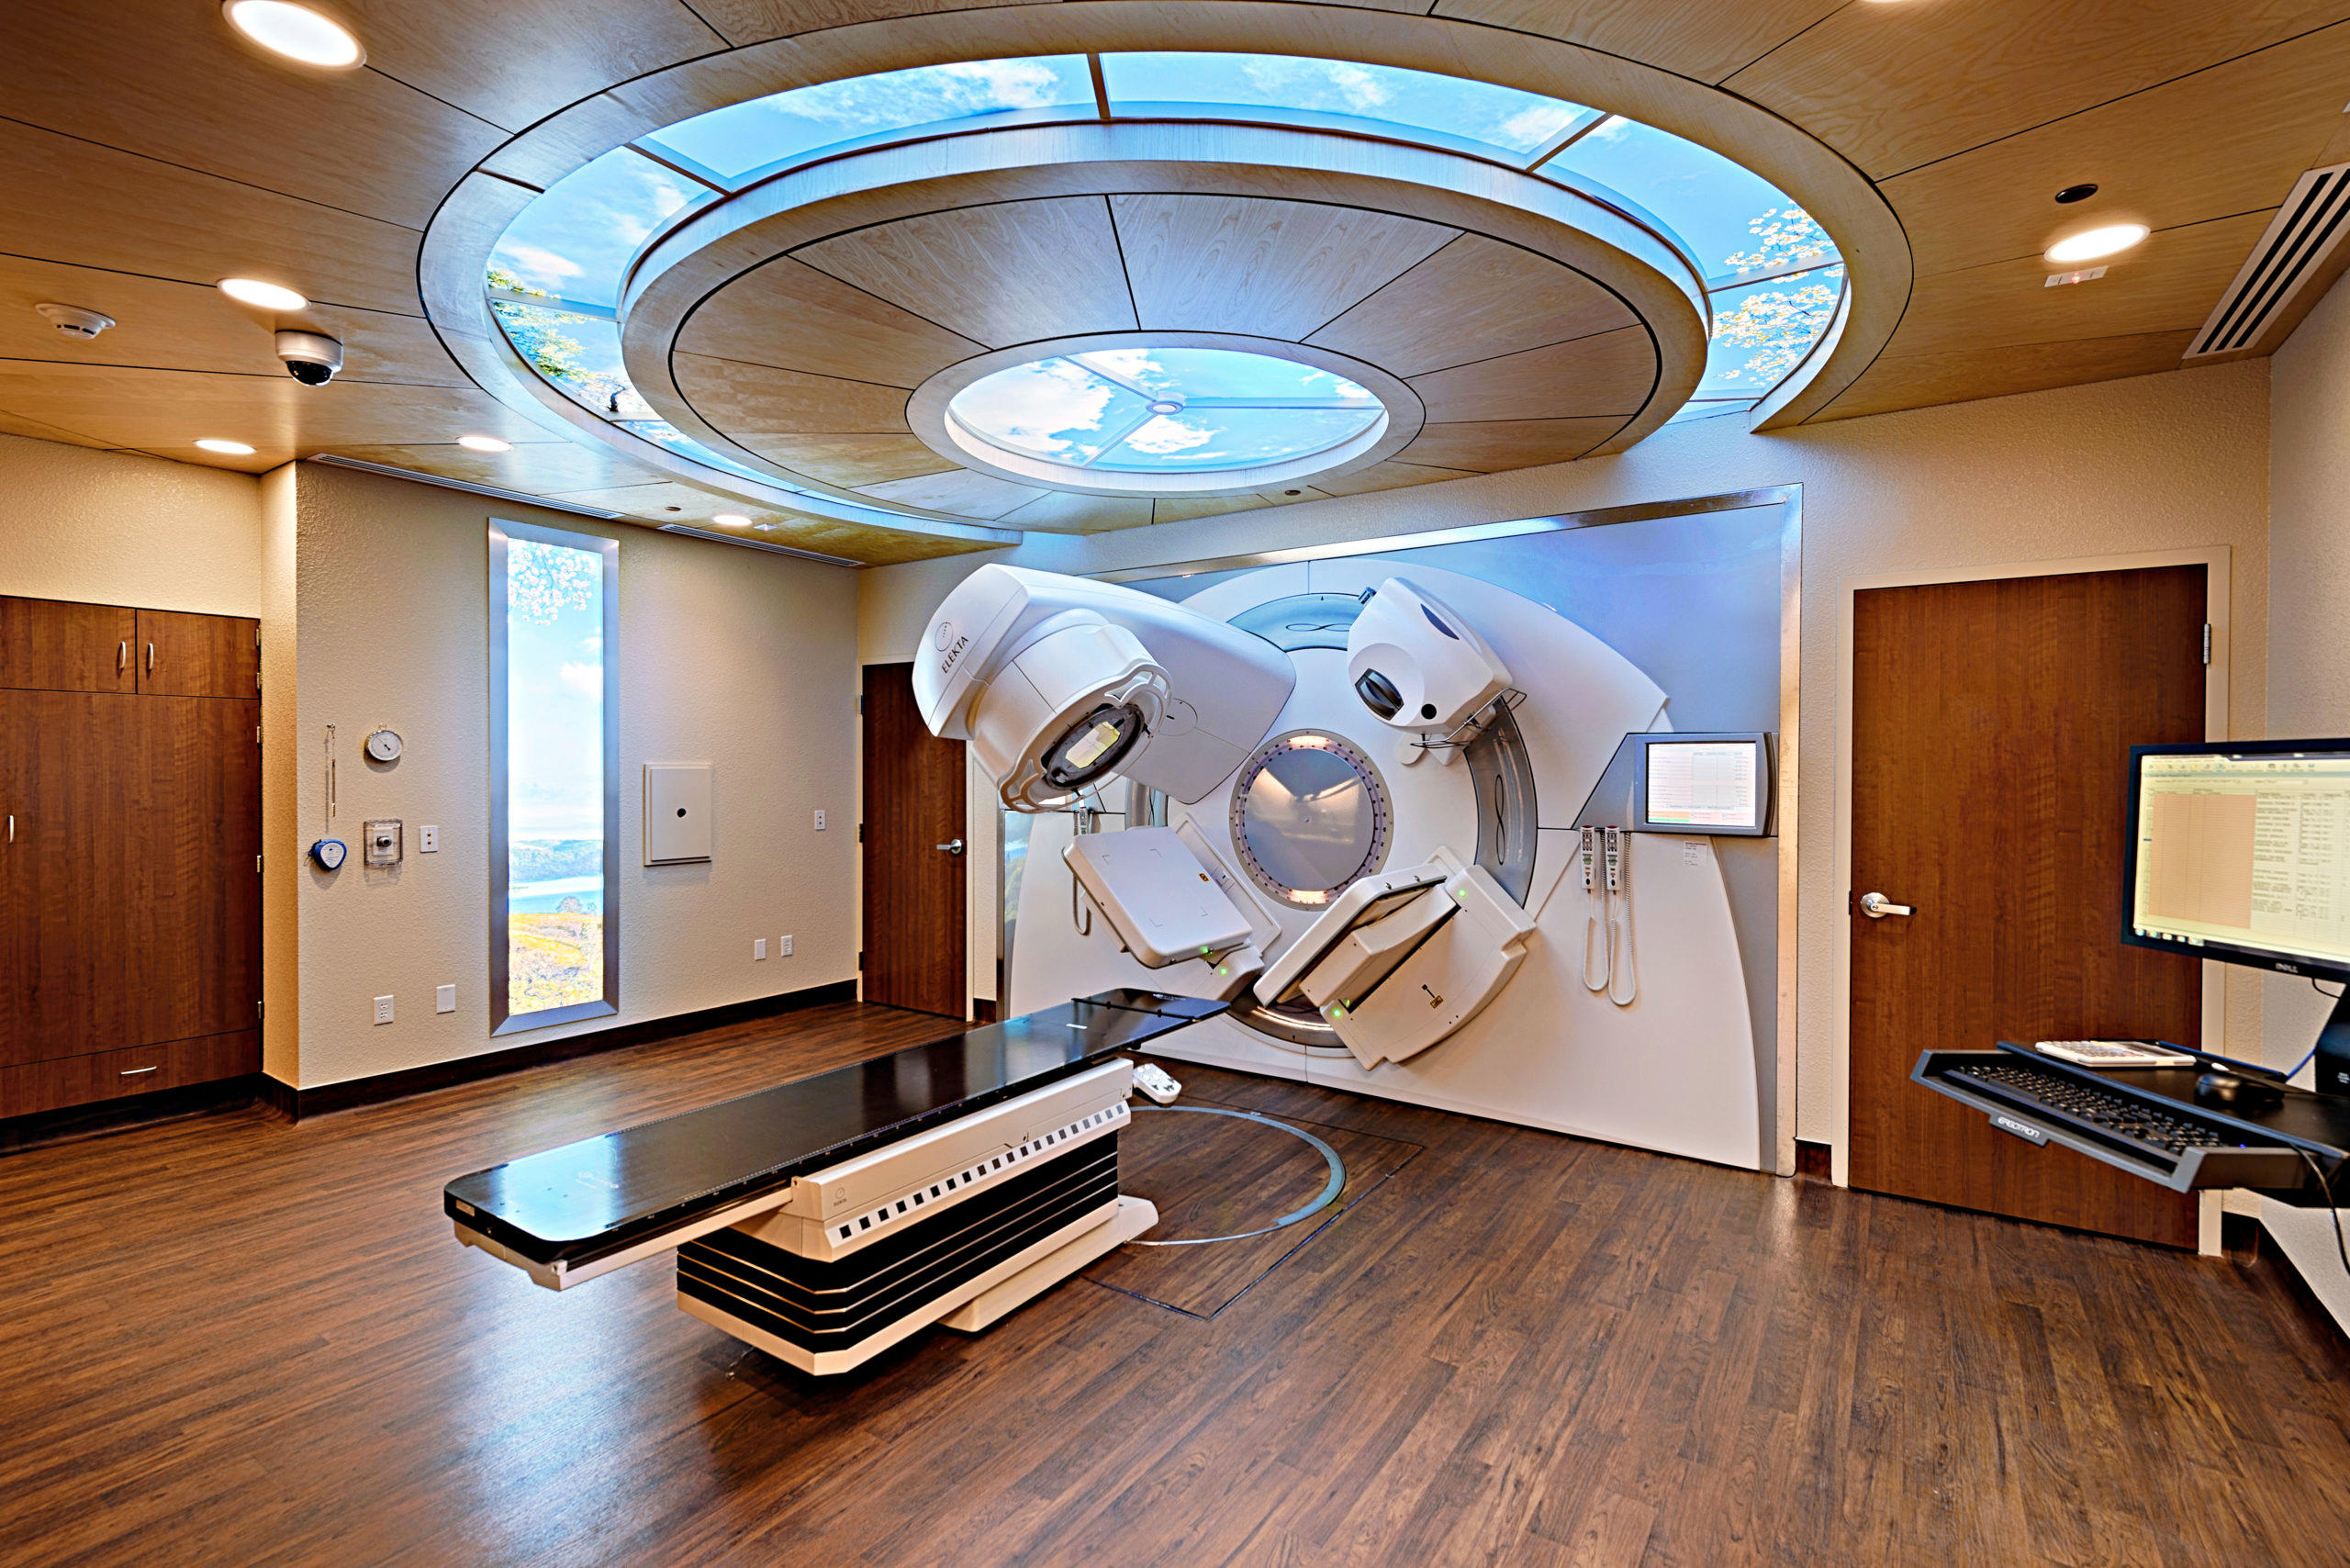 Sierra View Medical Center's Roger S. Good Cancer Treatment Center Photo